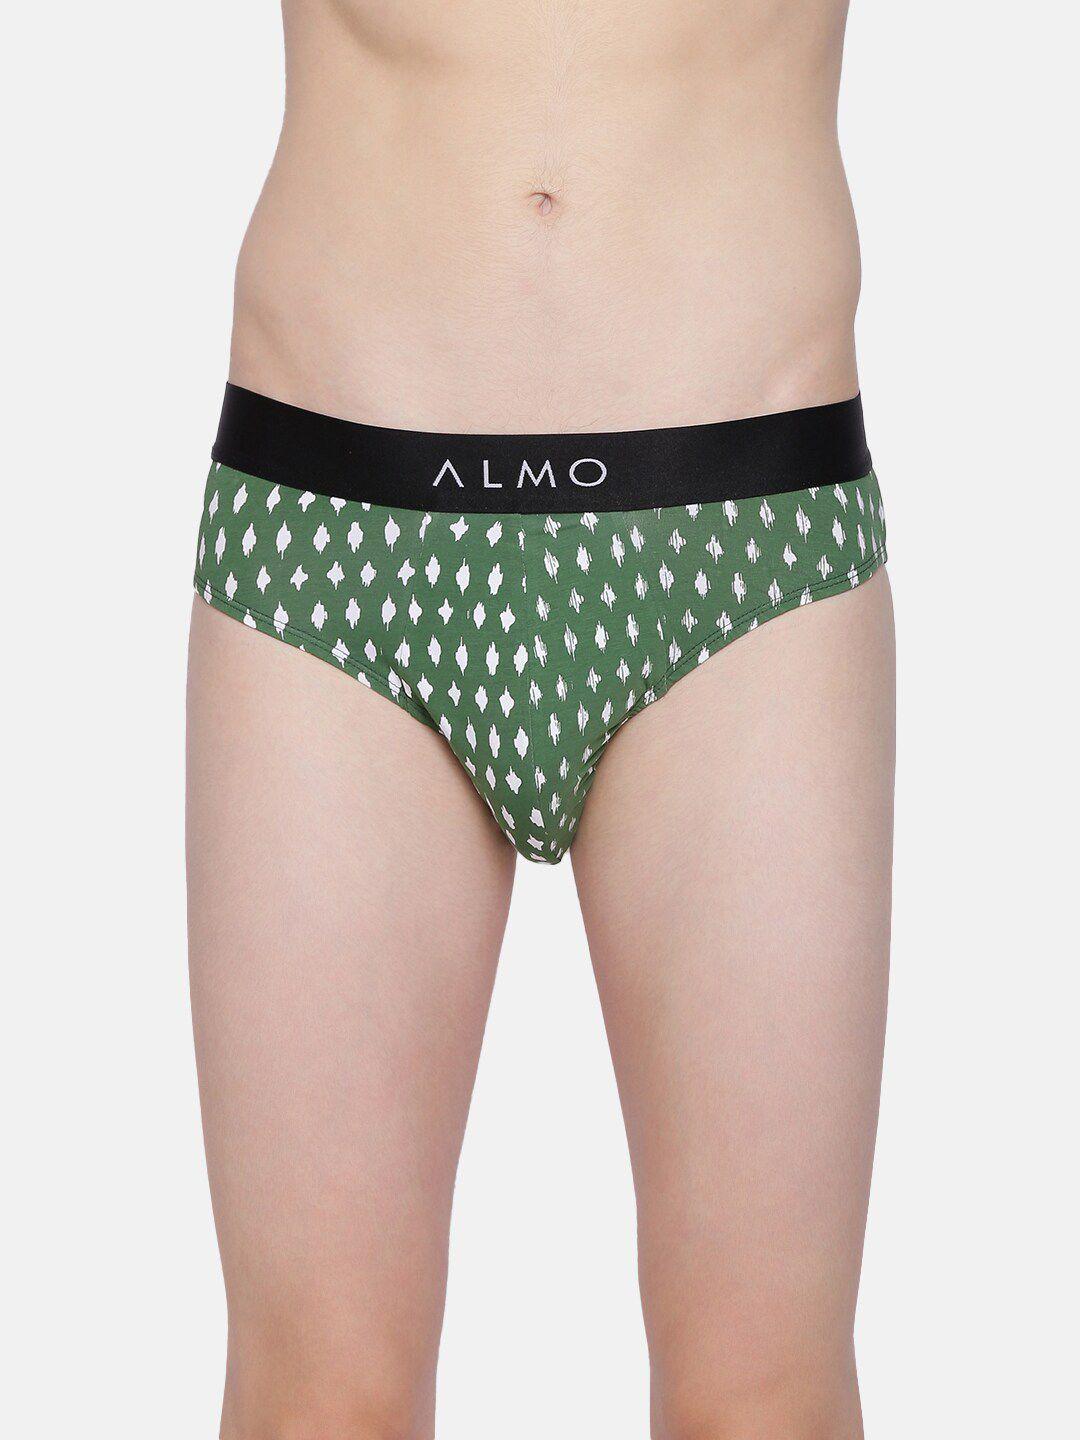 almo-wear-men-green-&-white-printed-organic-cotton-basic-briefs